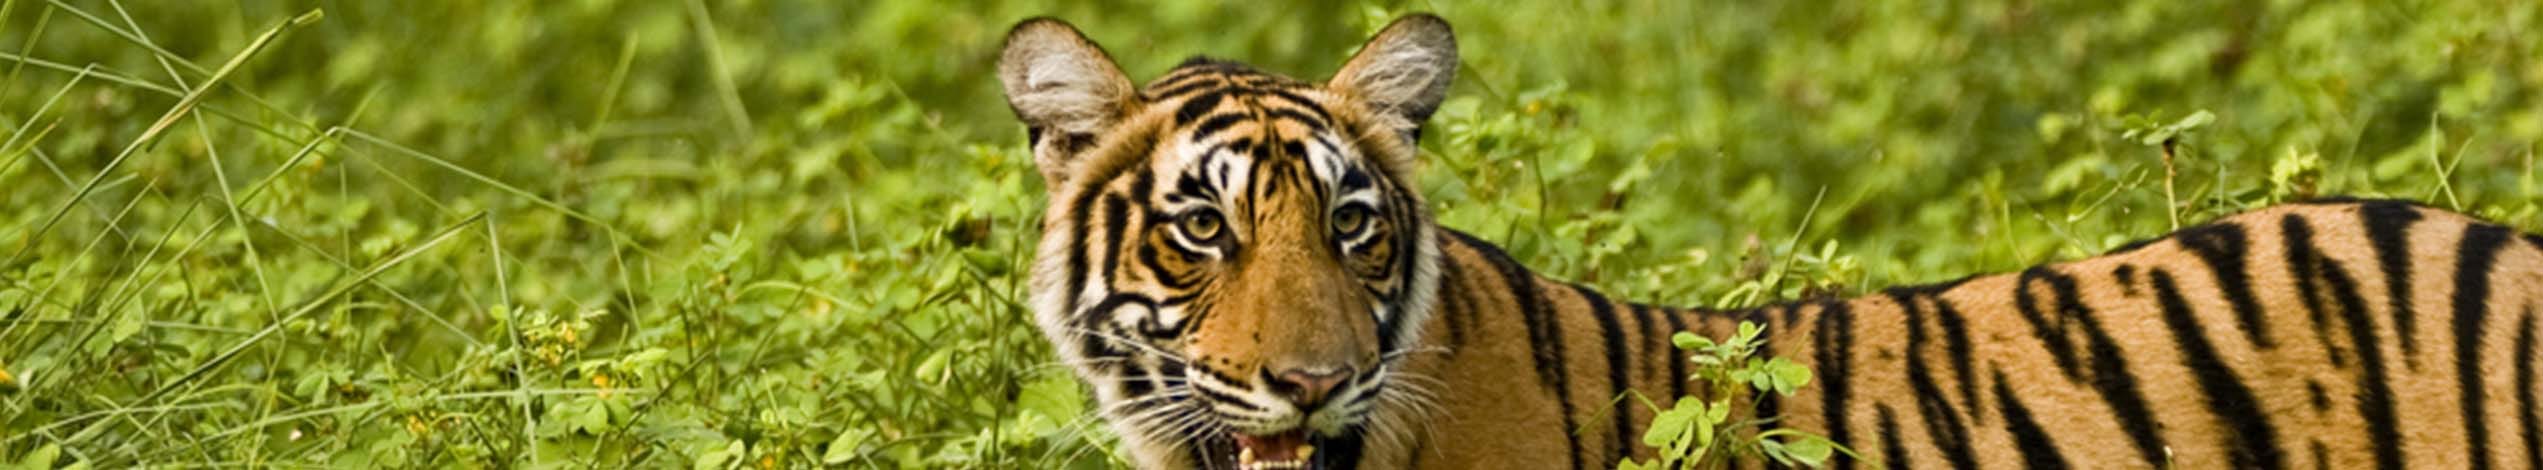 Ranthambhore Tigerpark, tillæg til Rajasthan turene